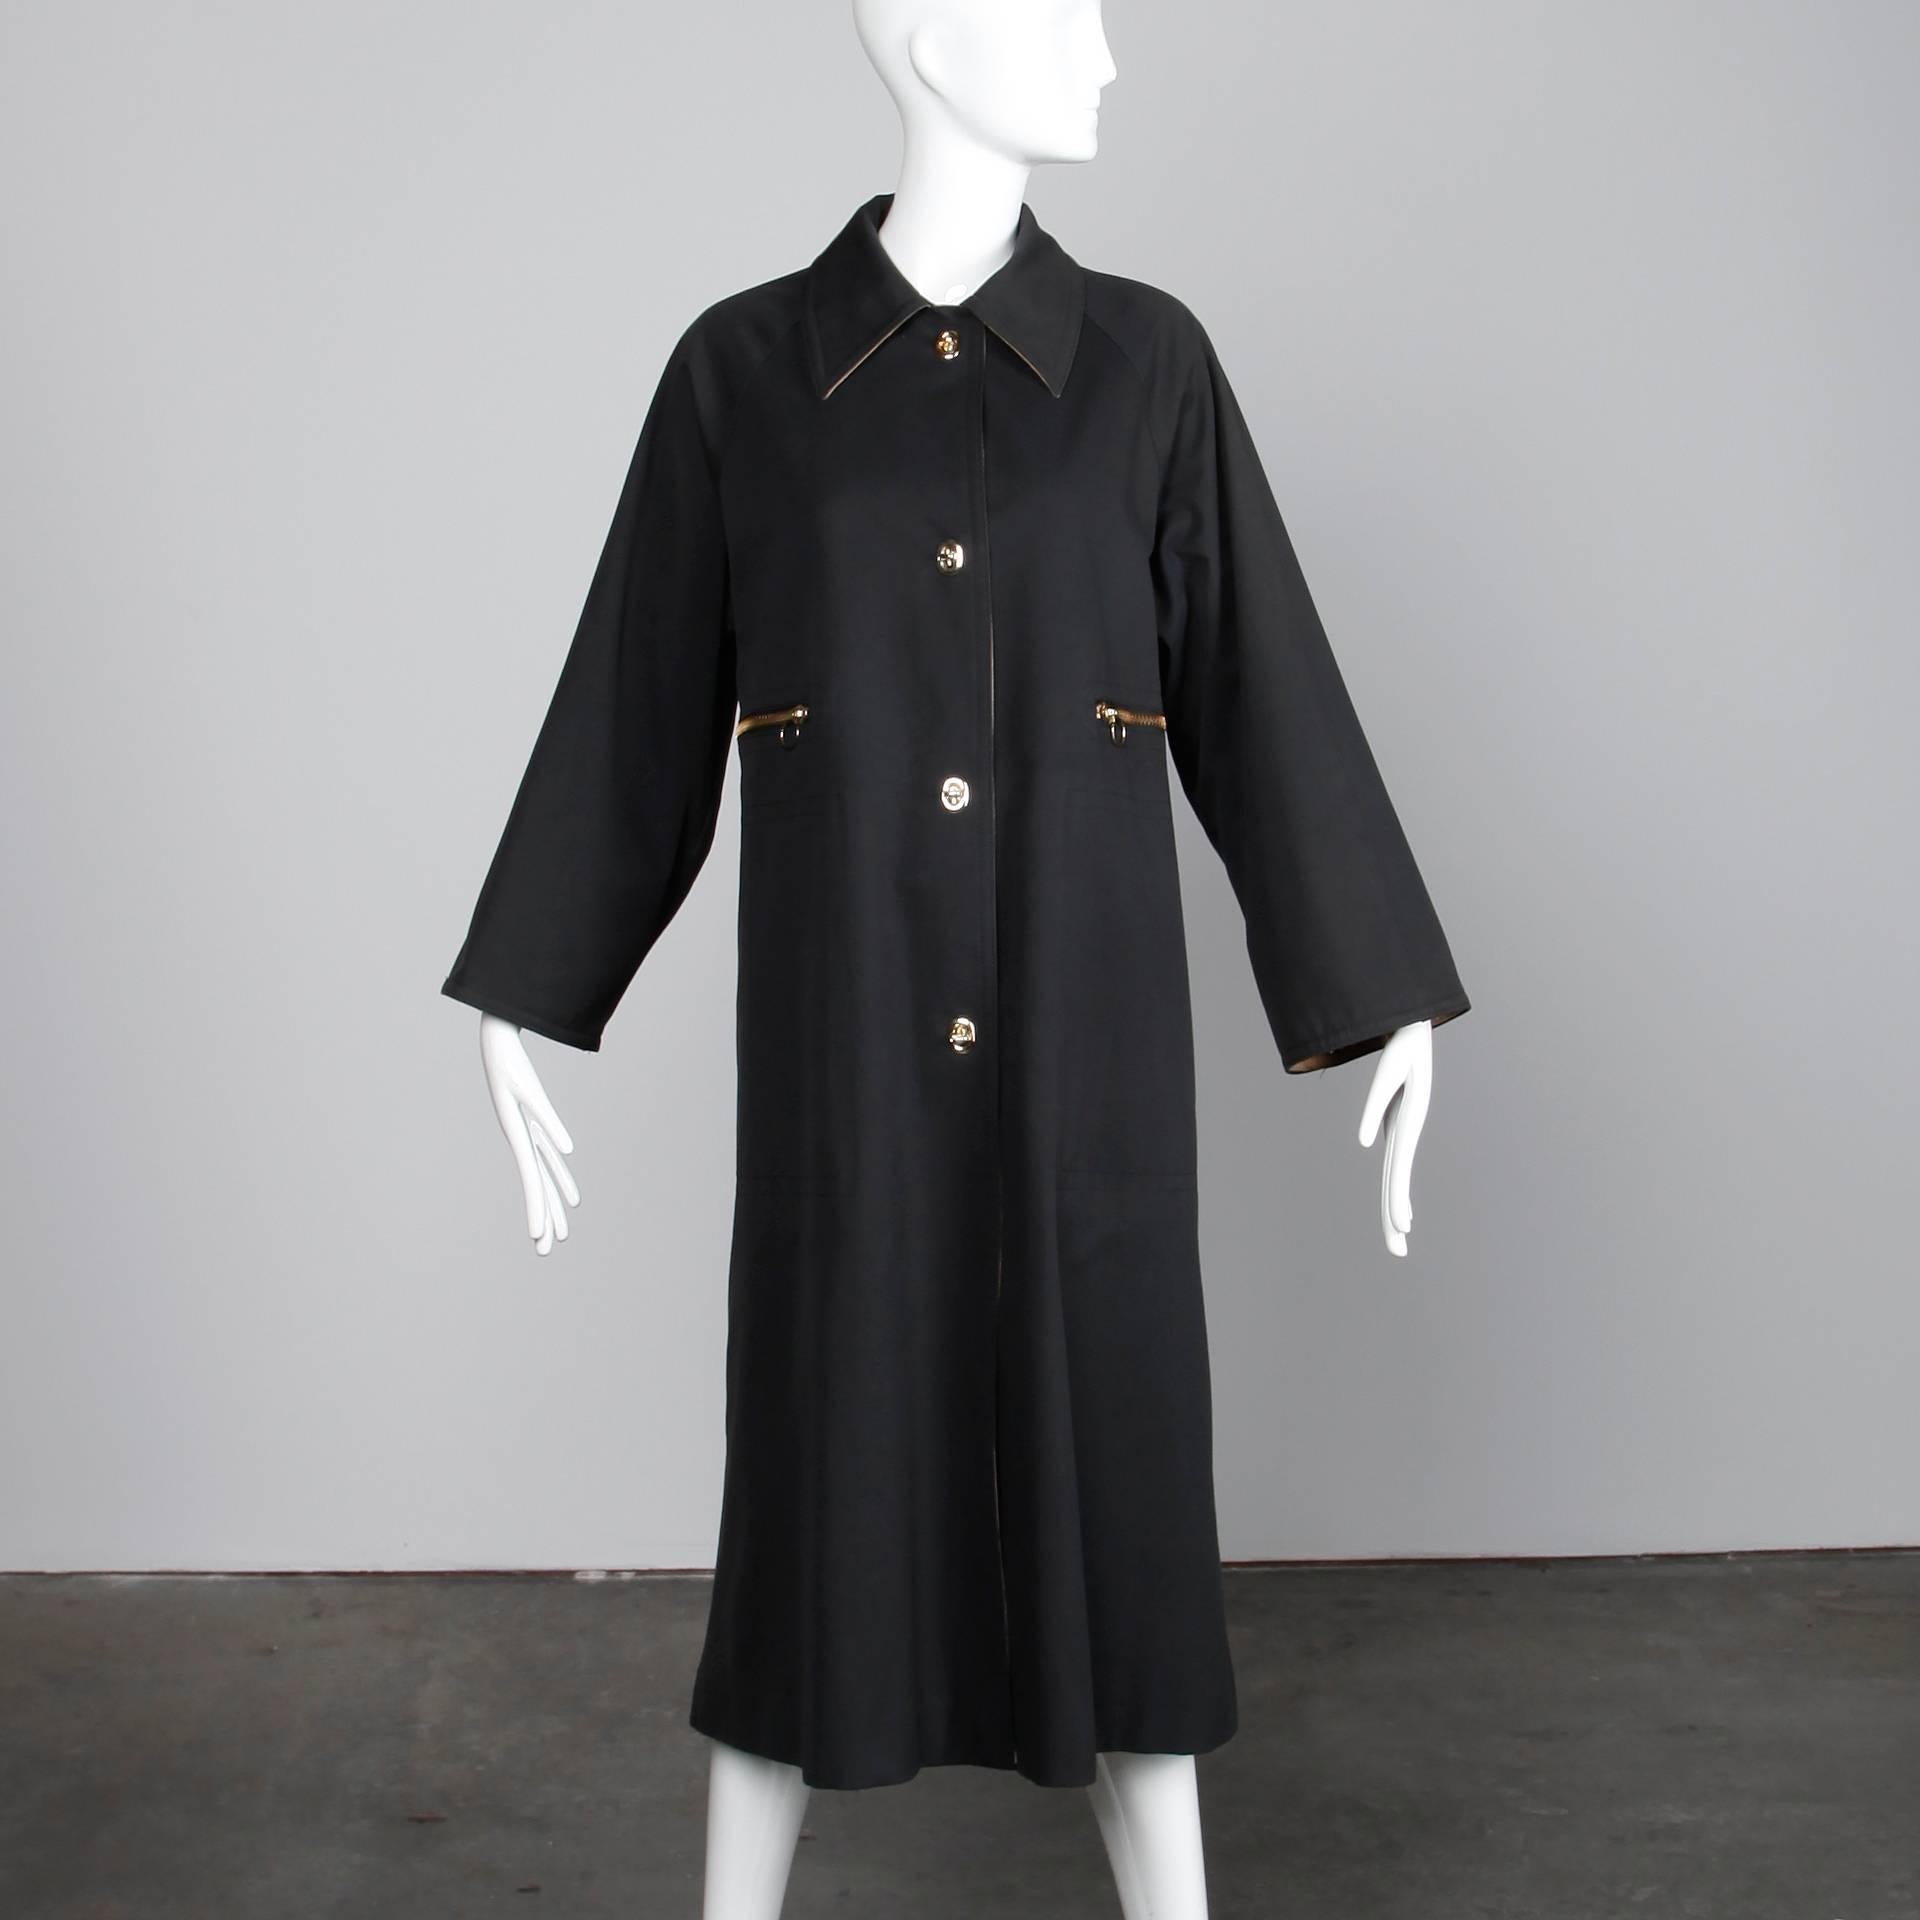  Bonnie Cashin for Russ Taylor Vintage Black and Tan Rain Coat, 1970s 2